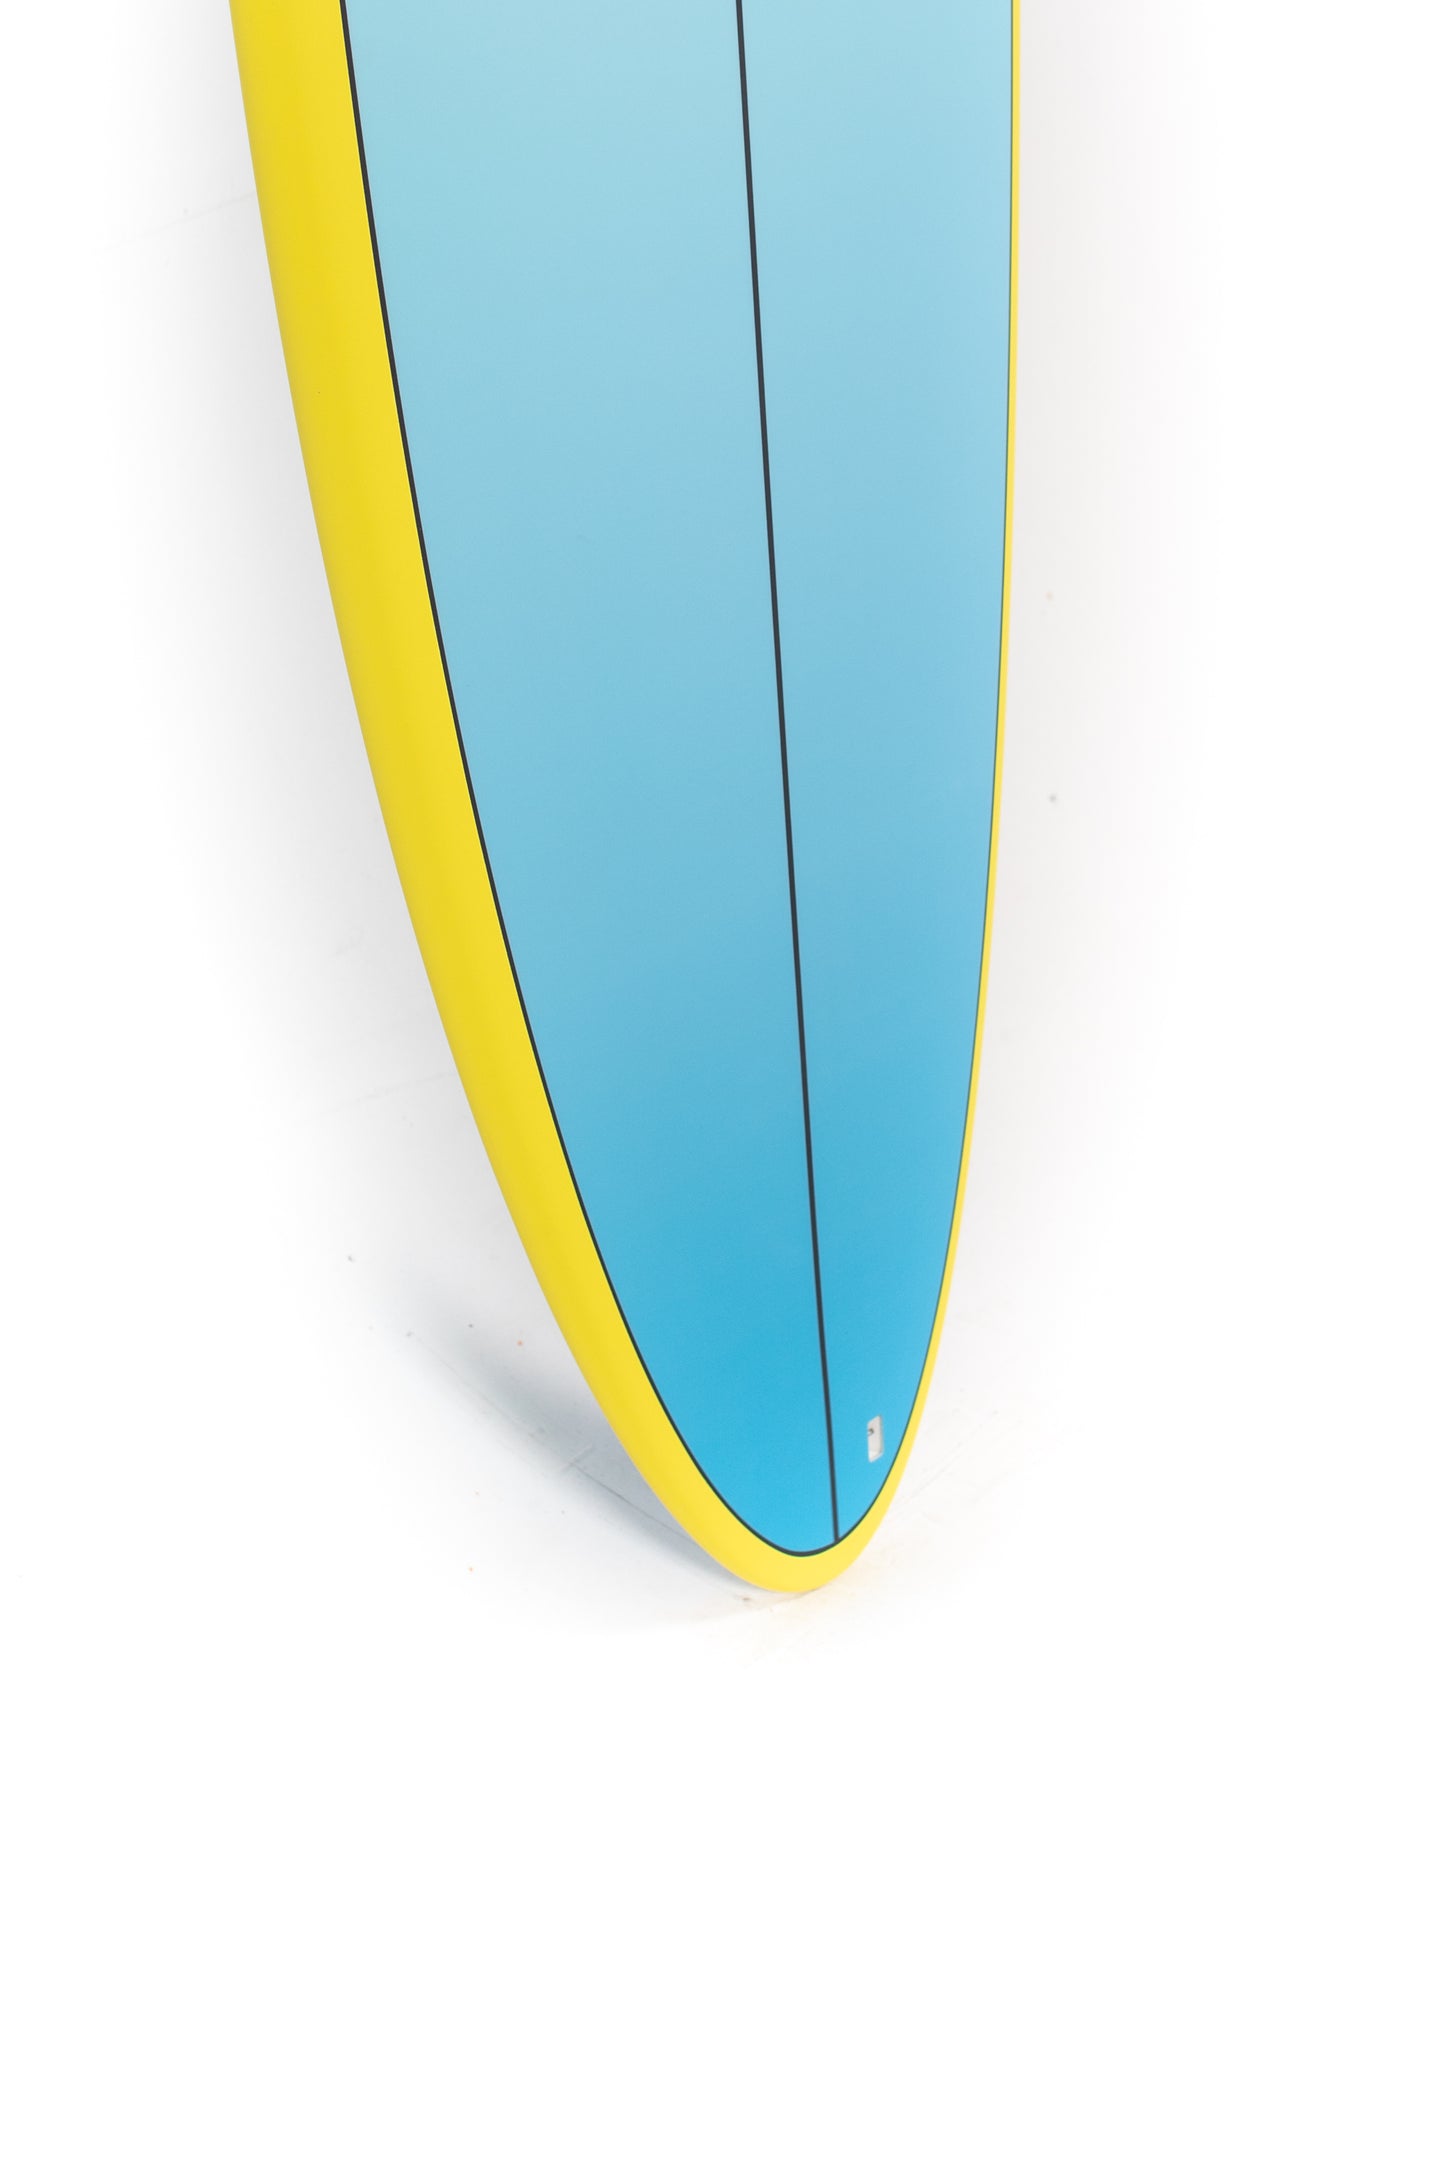 
                  
                    Pukas-Surf-Shop-Torq-Surfboards-Fun-6_8
                  
                